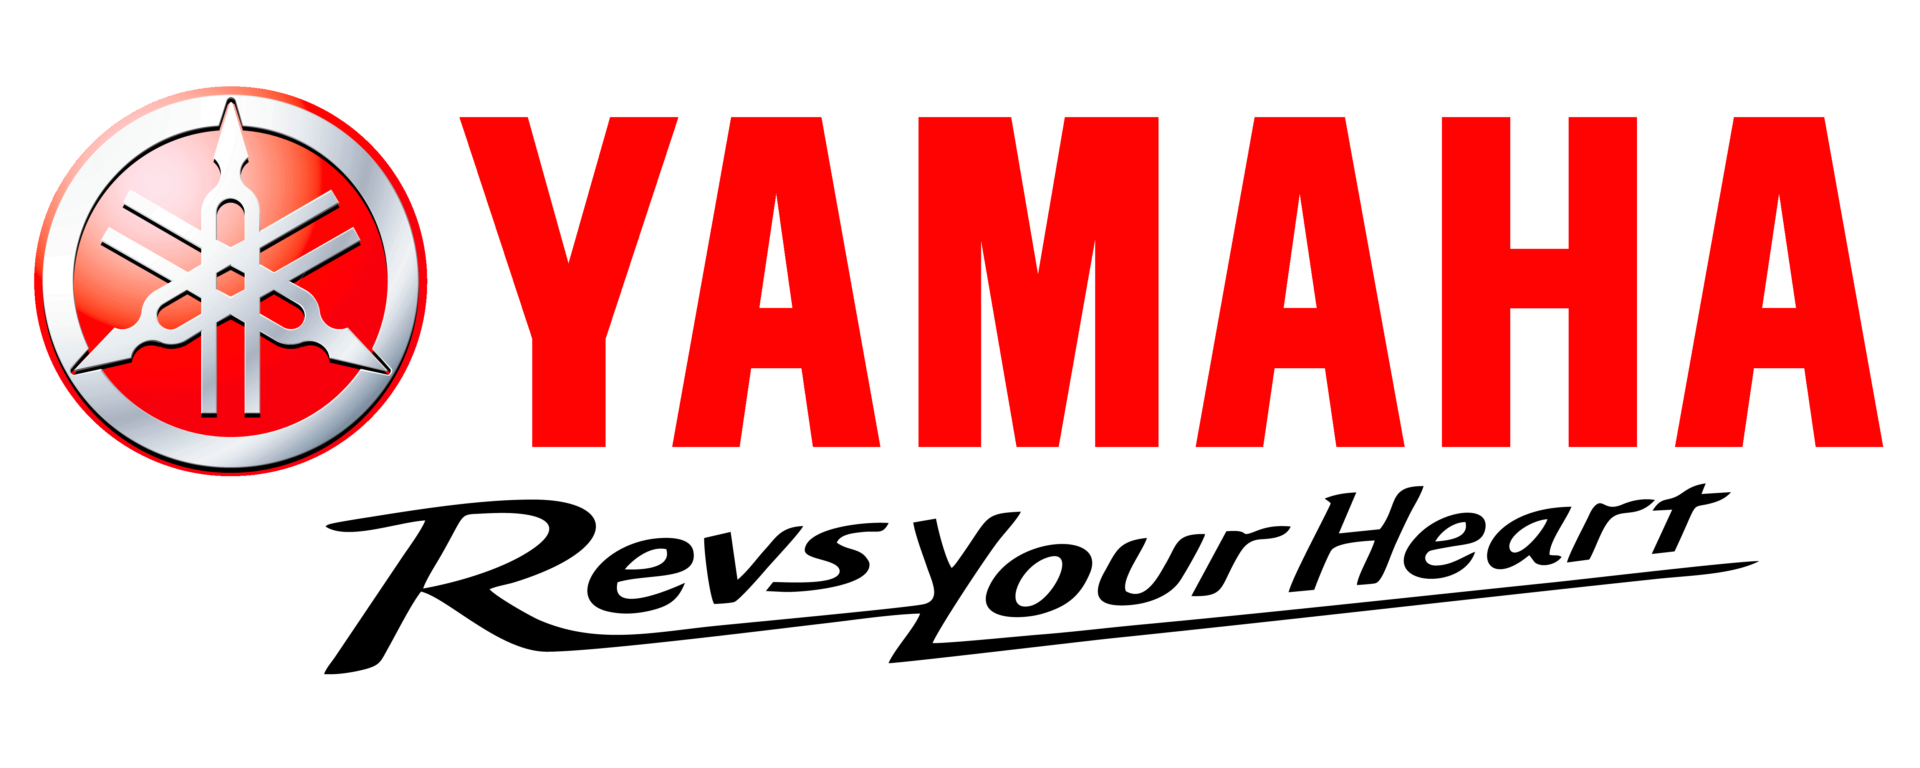 Yamaha-Golf-Cart-Logo